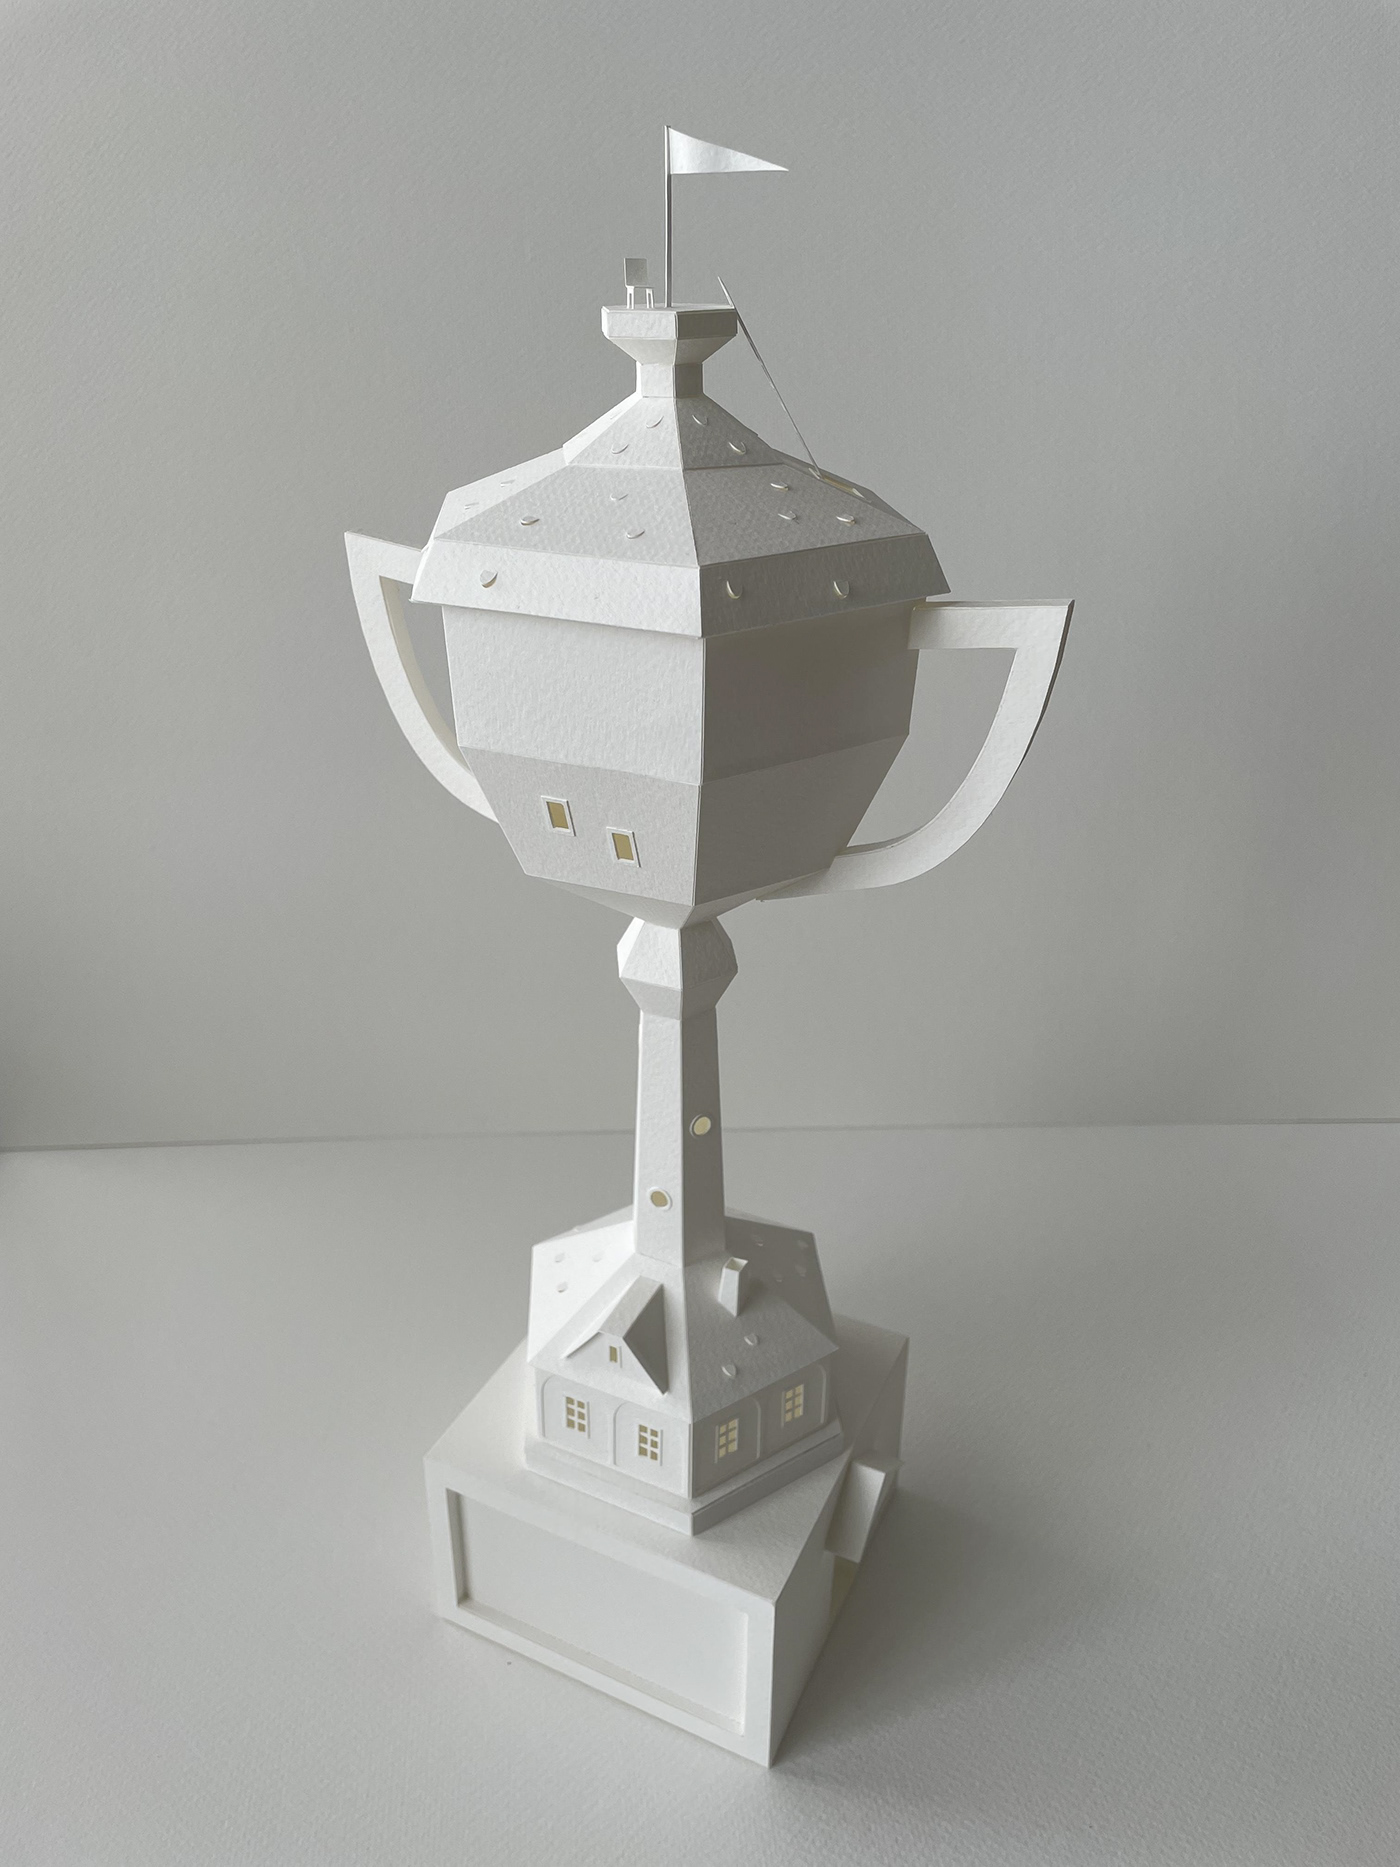 award paper paperart papercraft prize sculpture